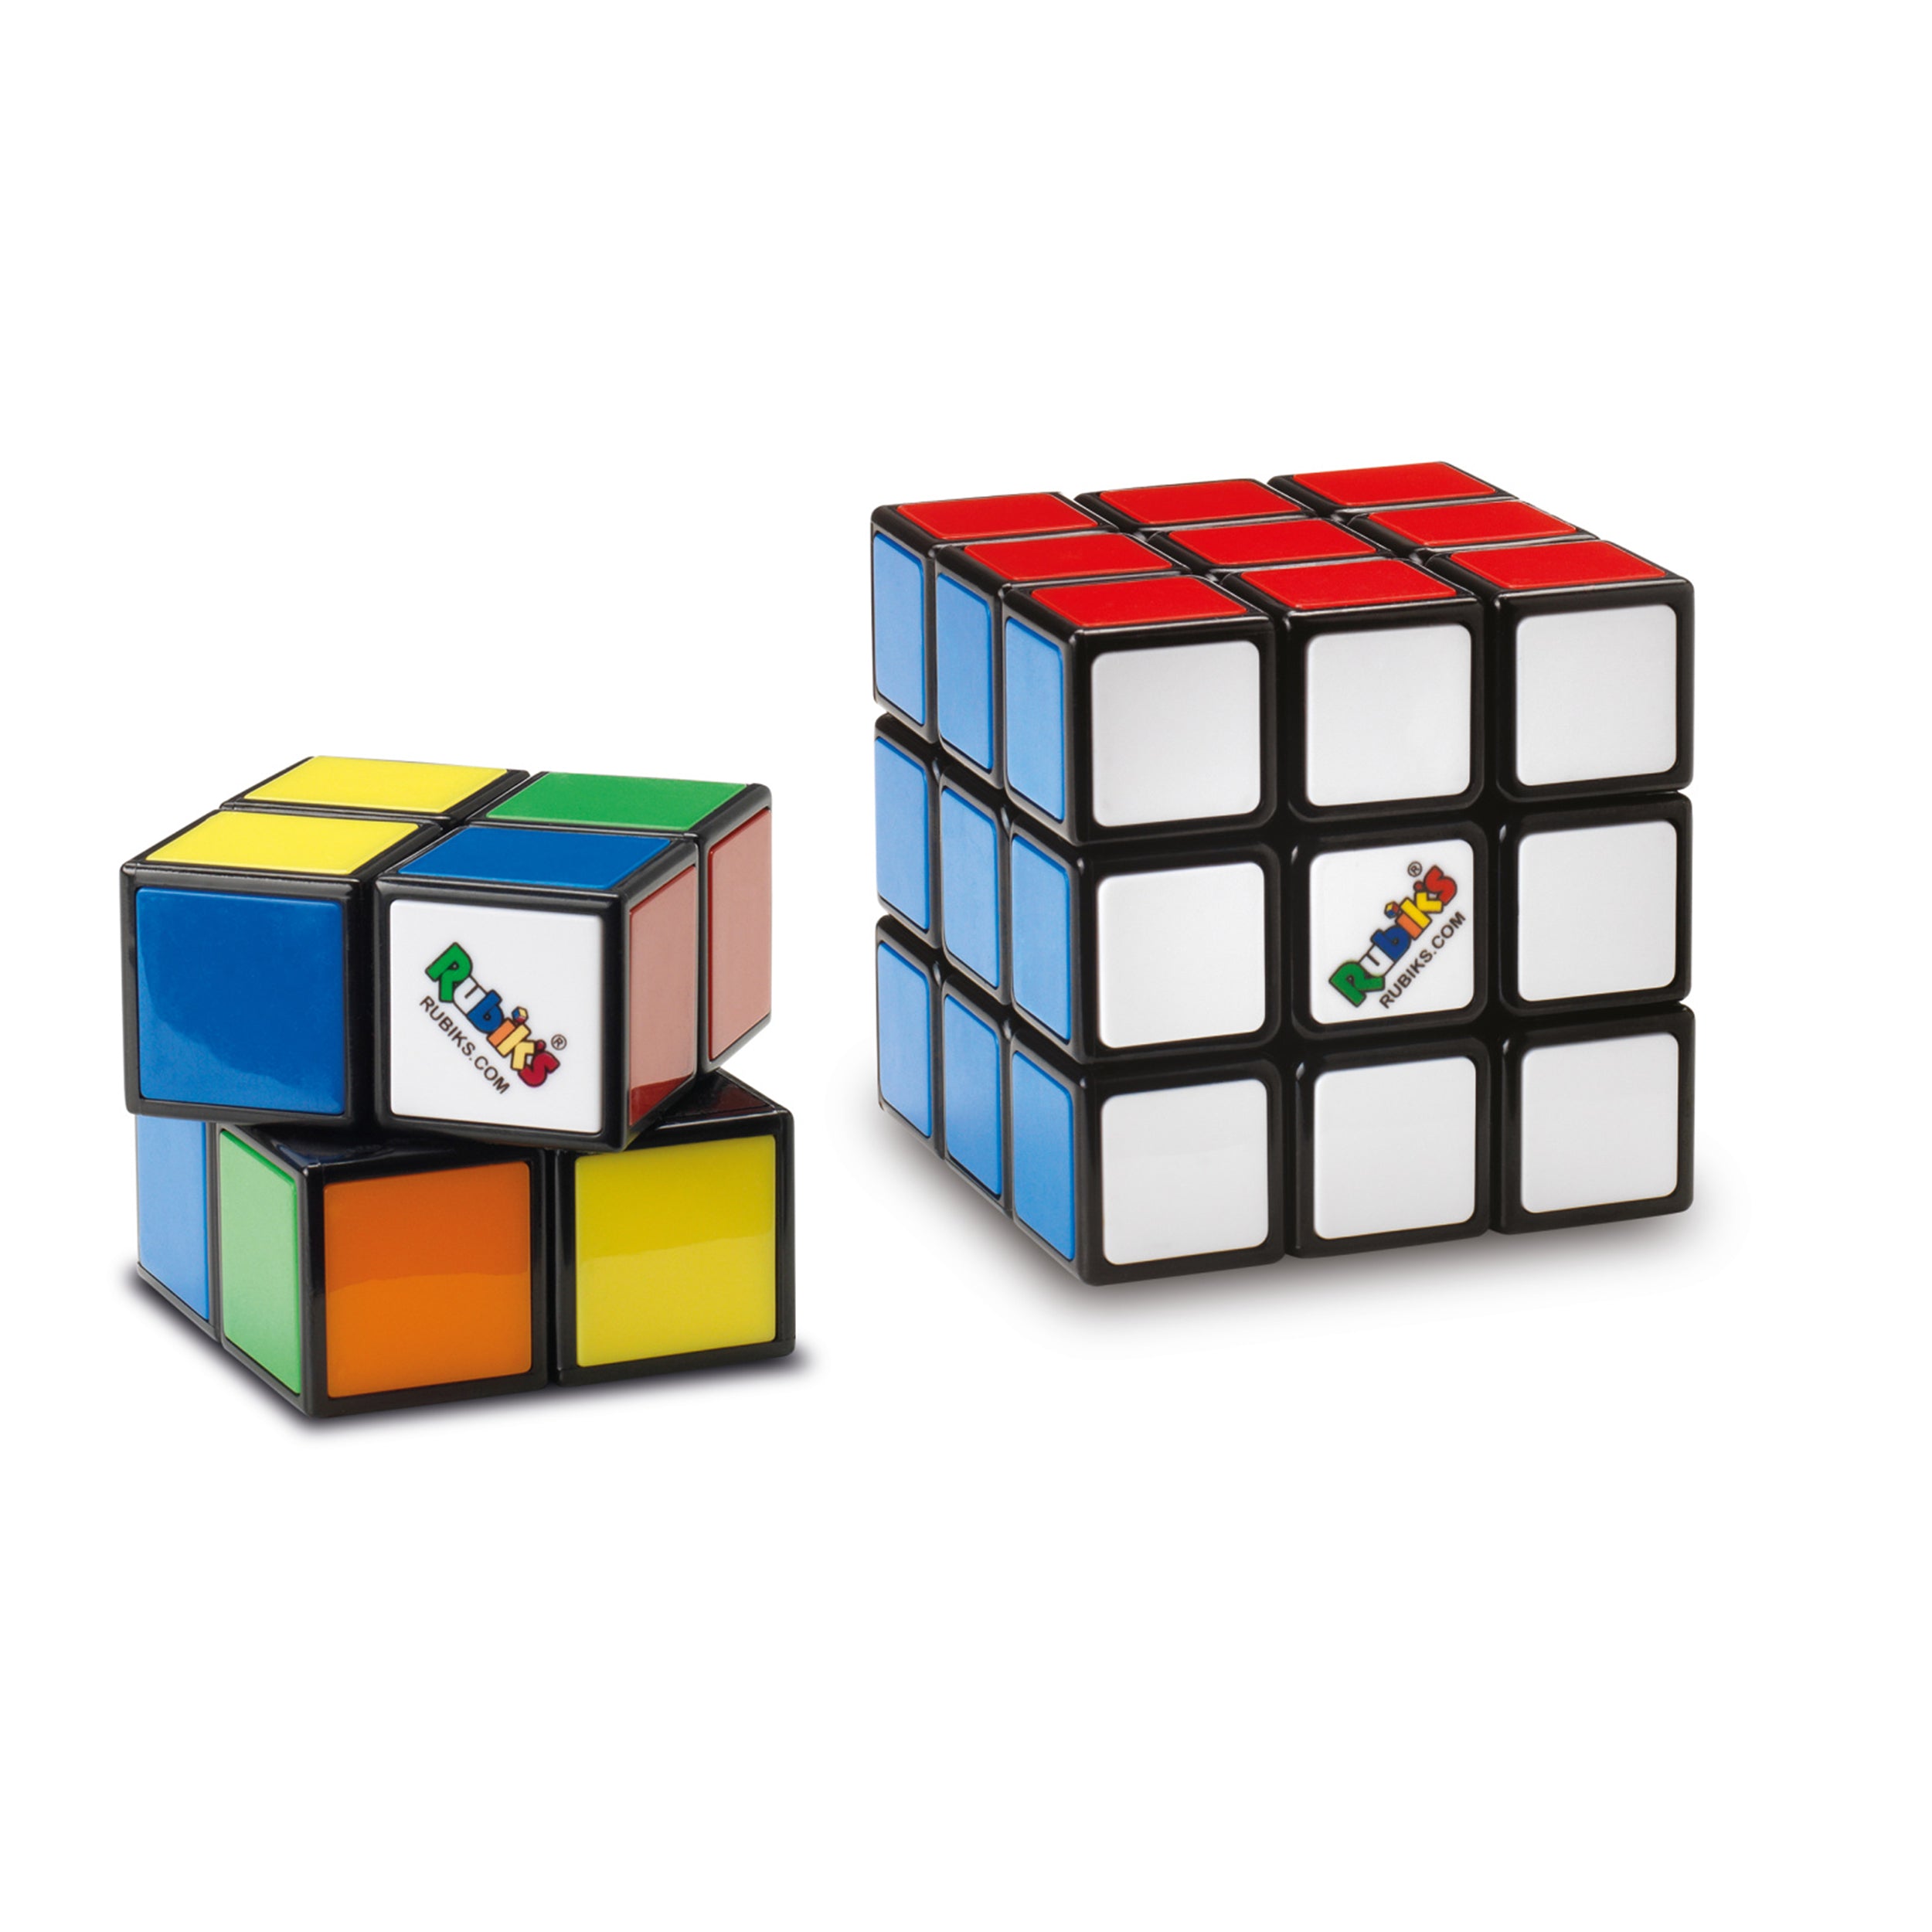 2x2 Rubiks Cube. Мини кубик Рубика. Кубик Рубика 2д. Кубик Рубика 17 на 17.